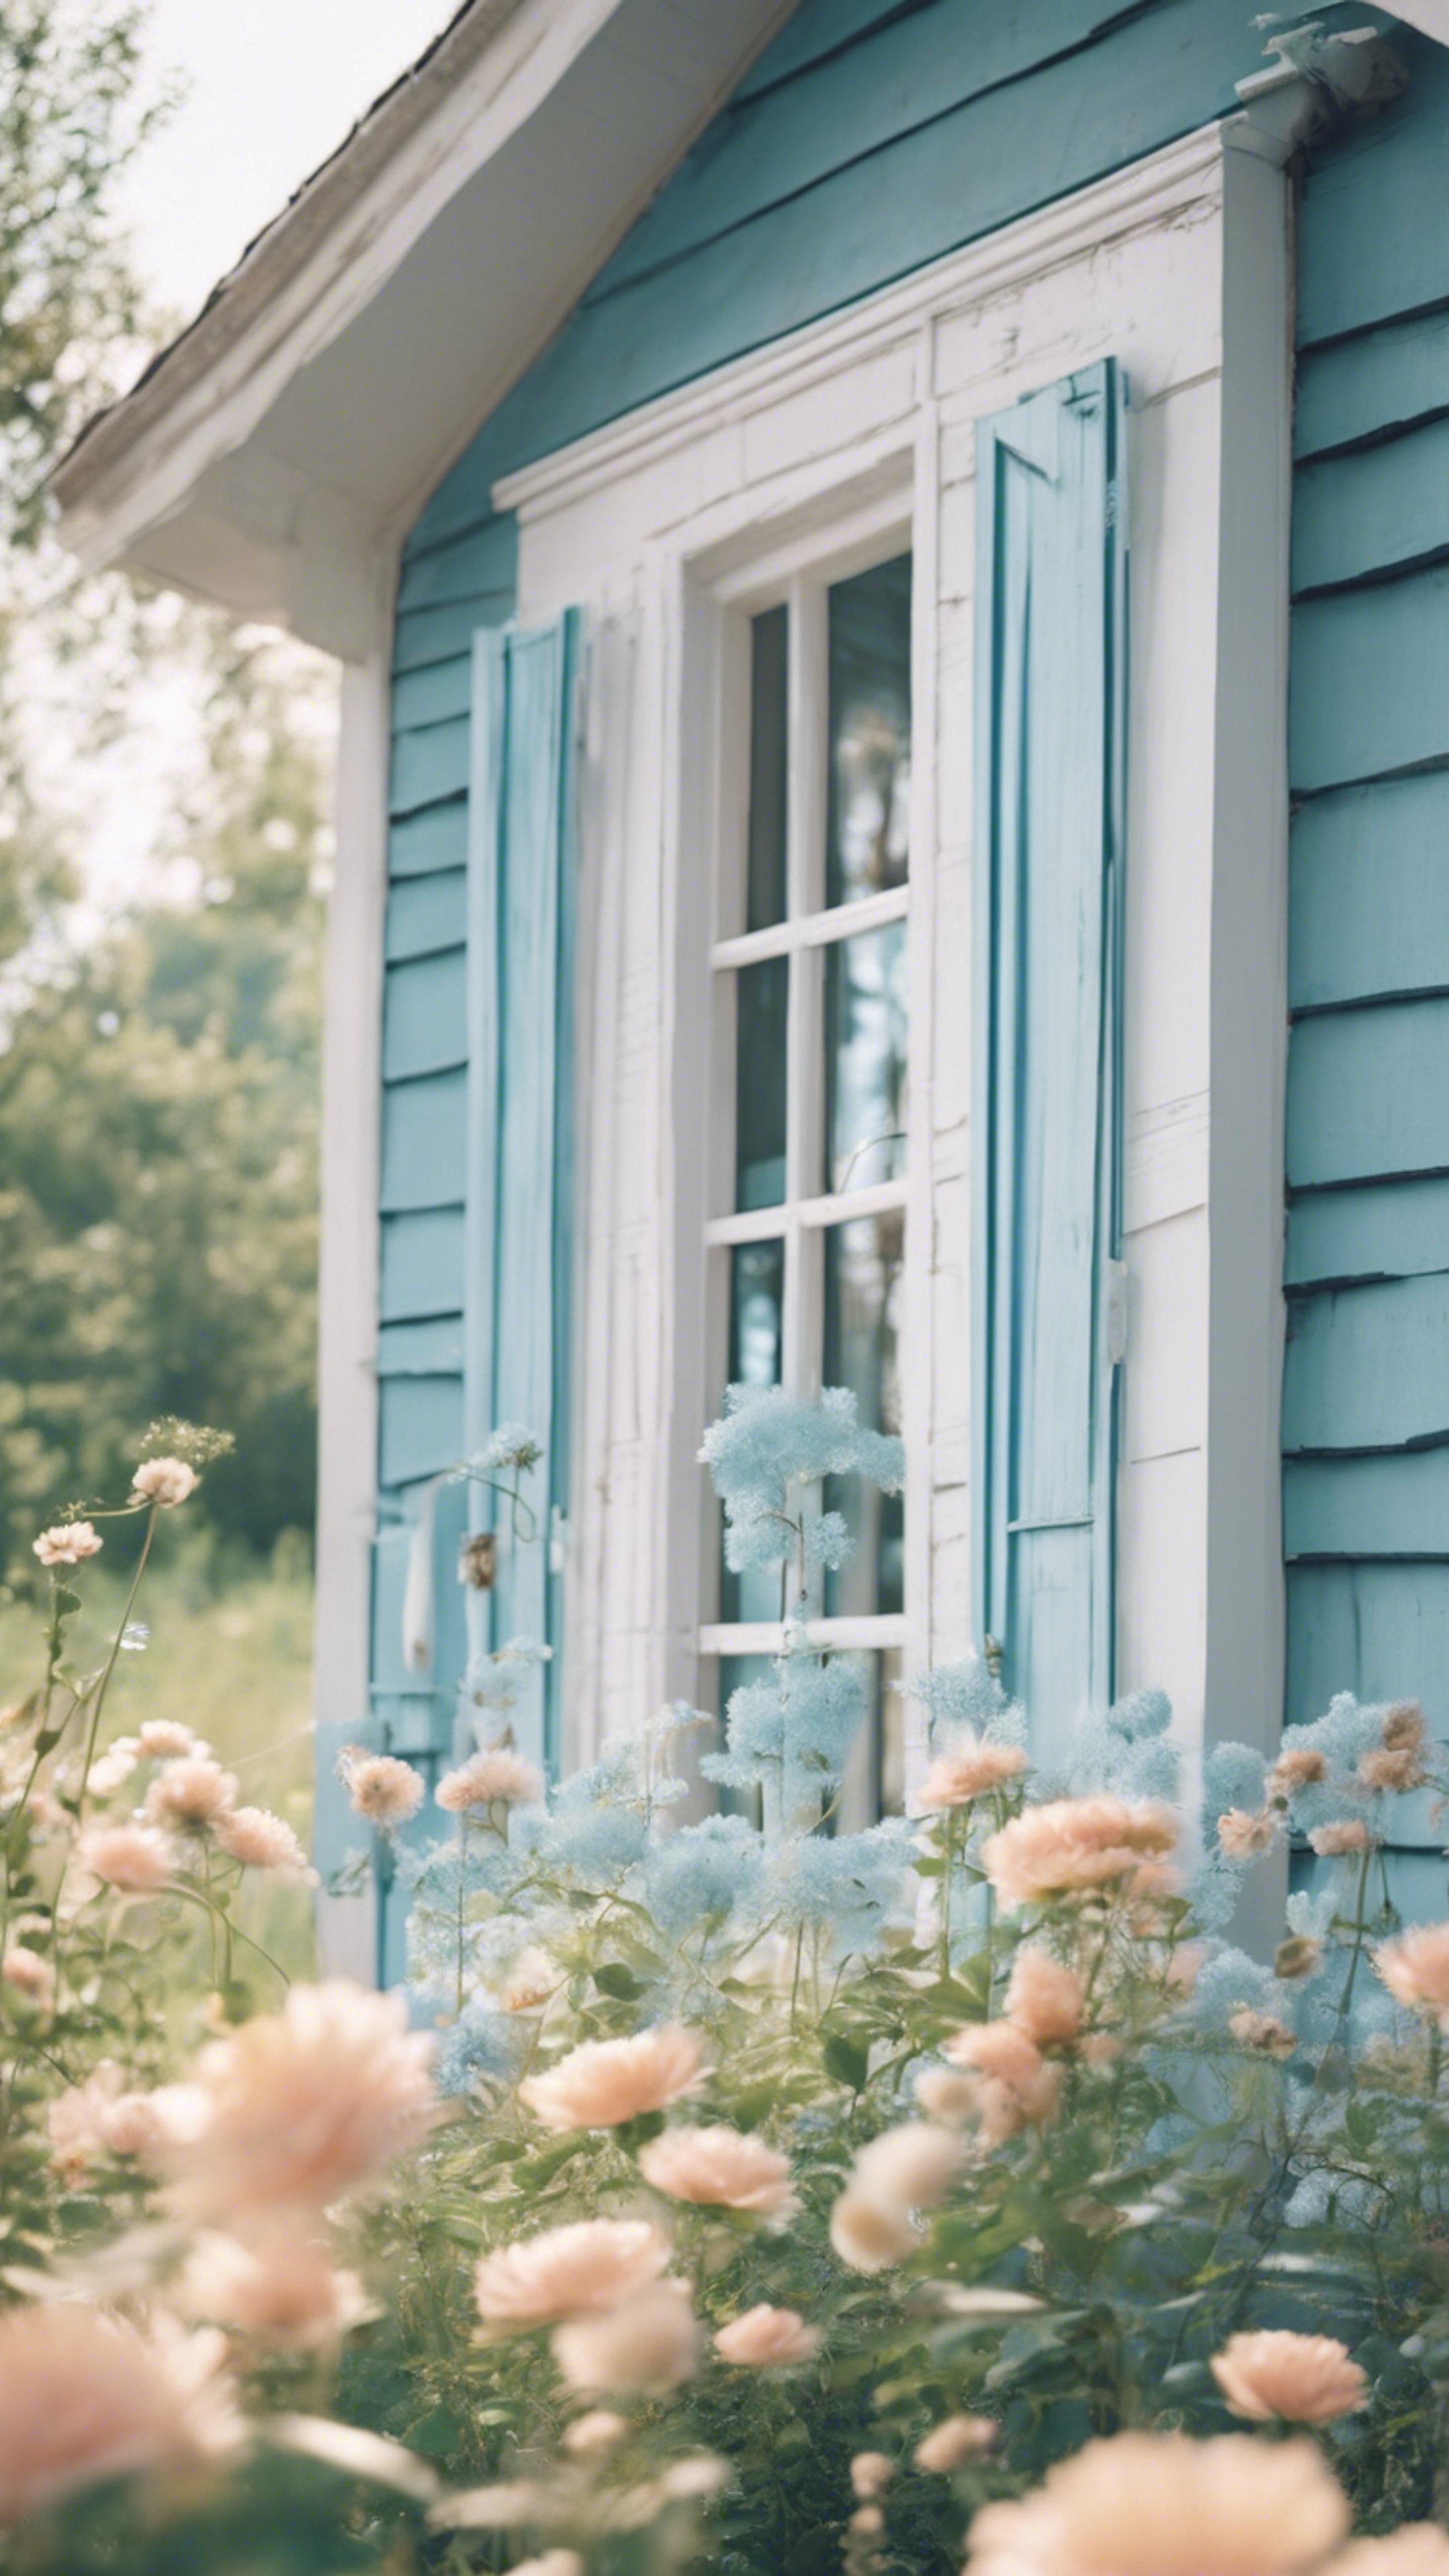 Preppy pastel blue summer farmhouse with white wooden windows. ផ្ទាំង​រូបភាព[48dc49ad1a9b4a7c9166]